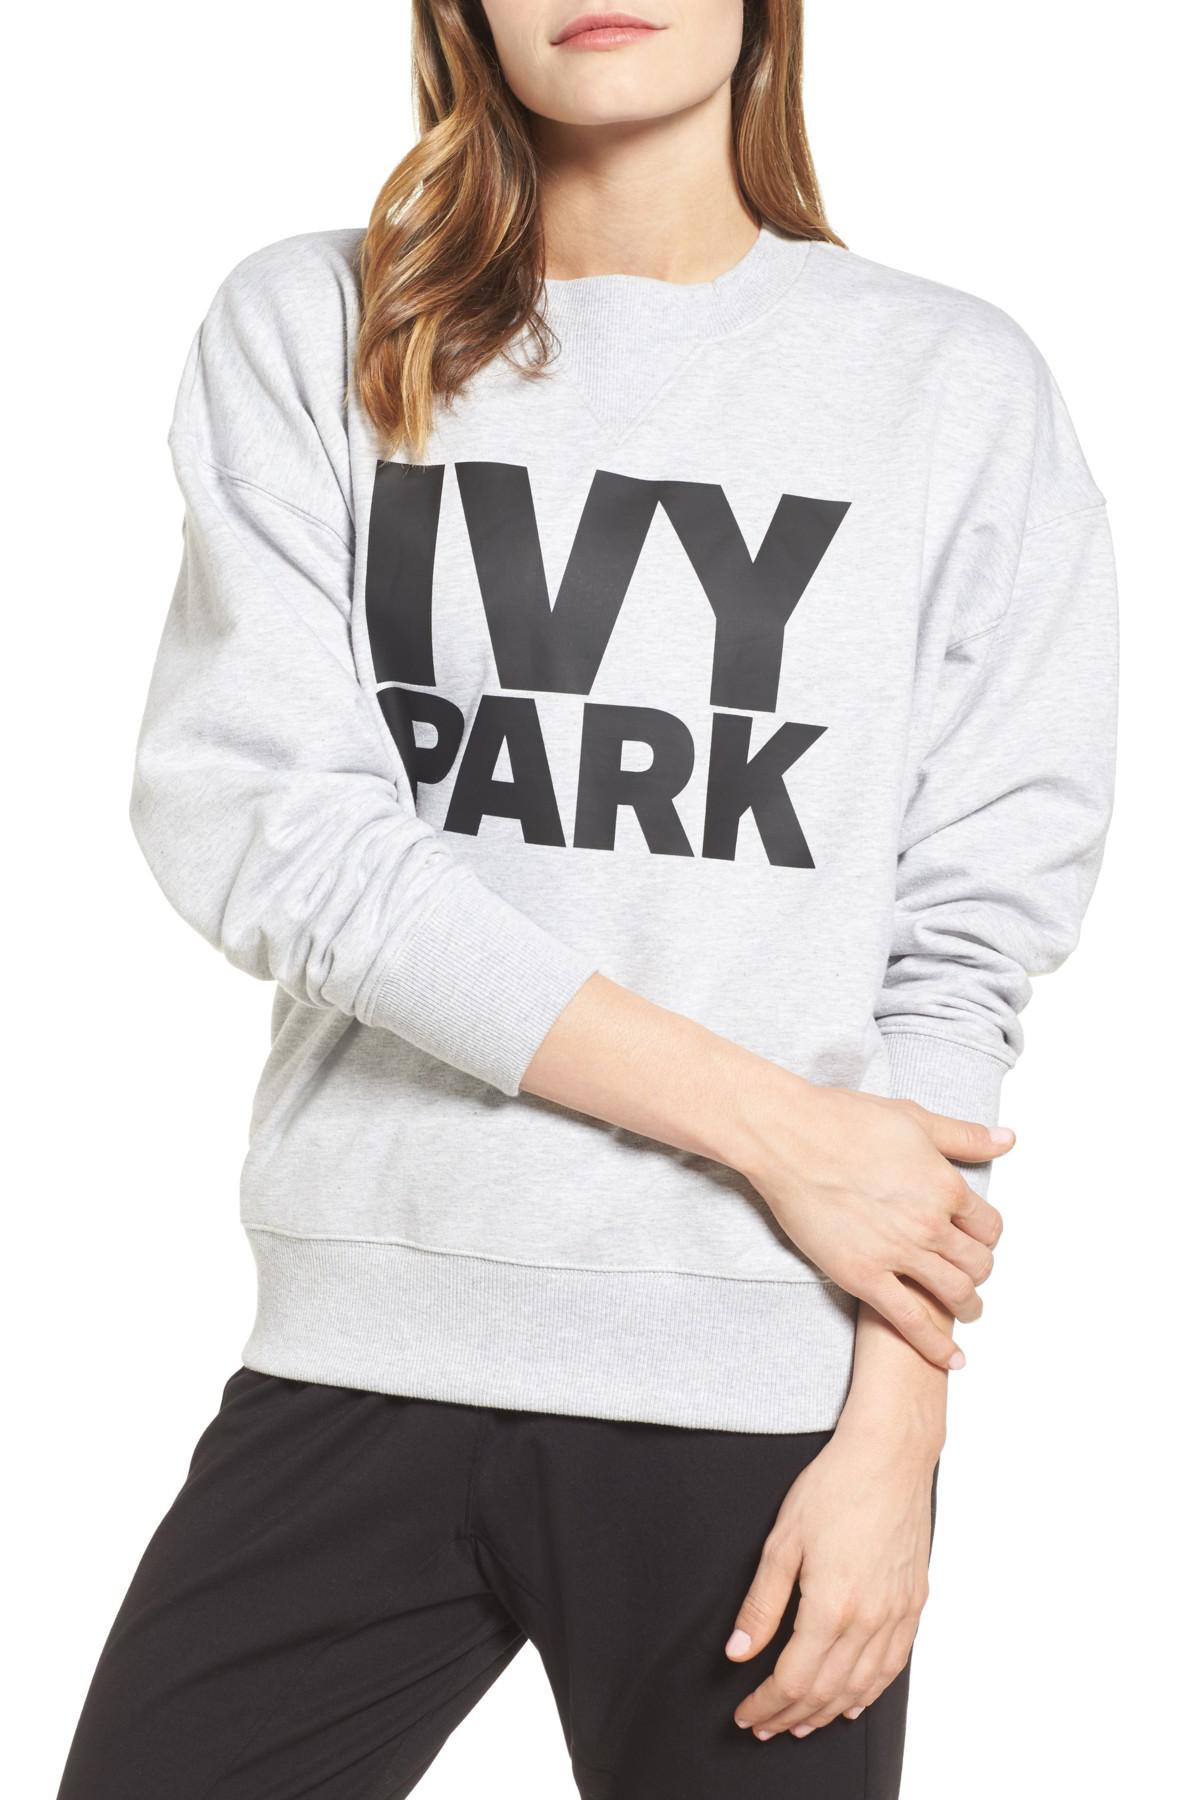 Lyst - Ivy park Logo Sweatshirt in Grey - Save 52%